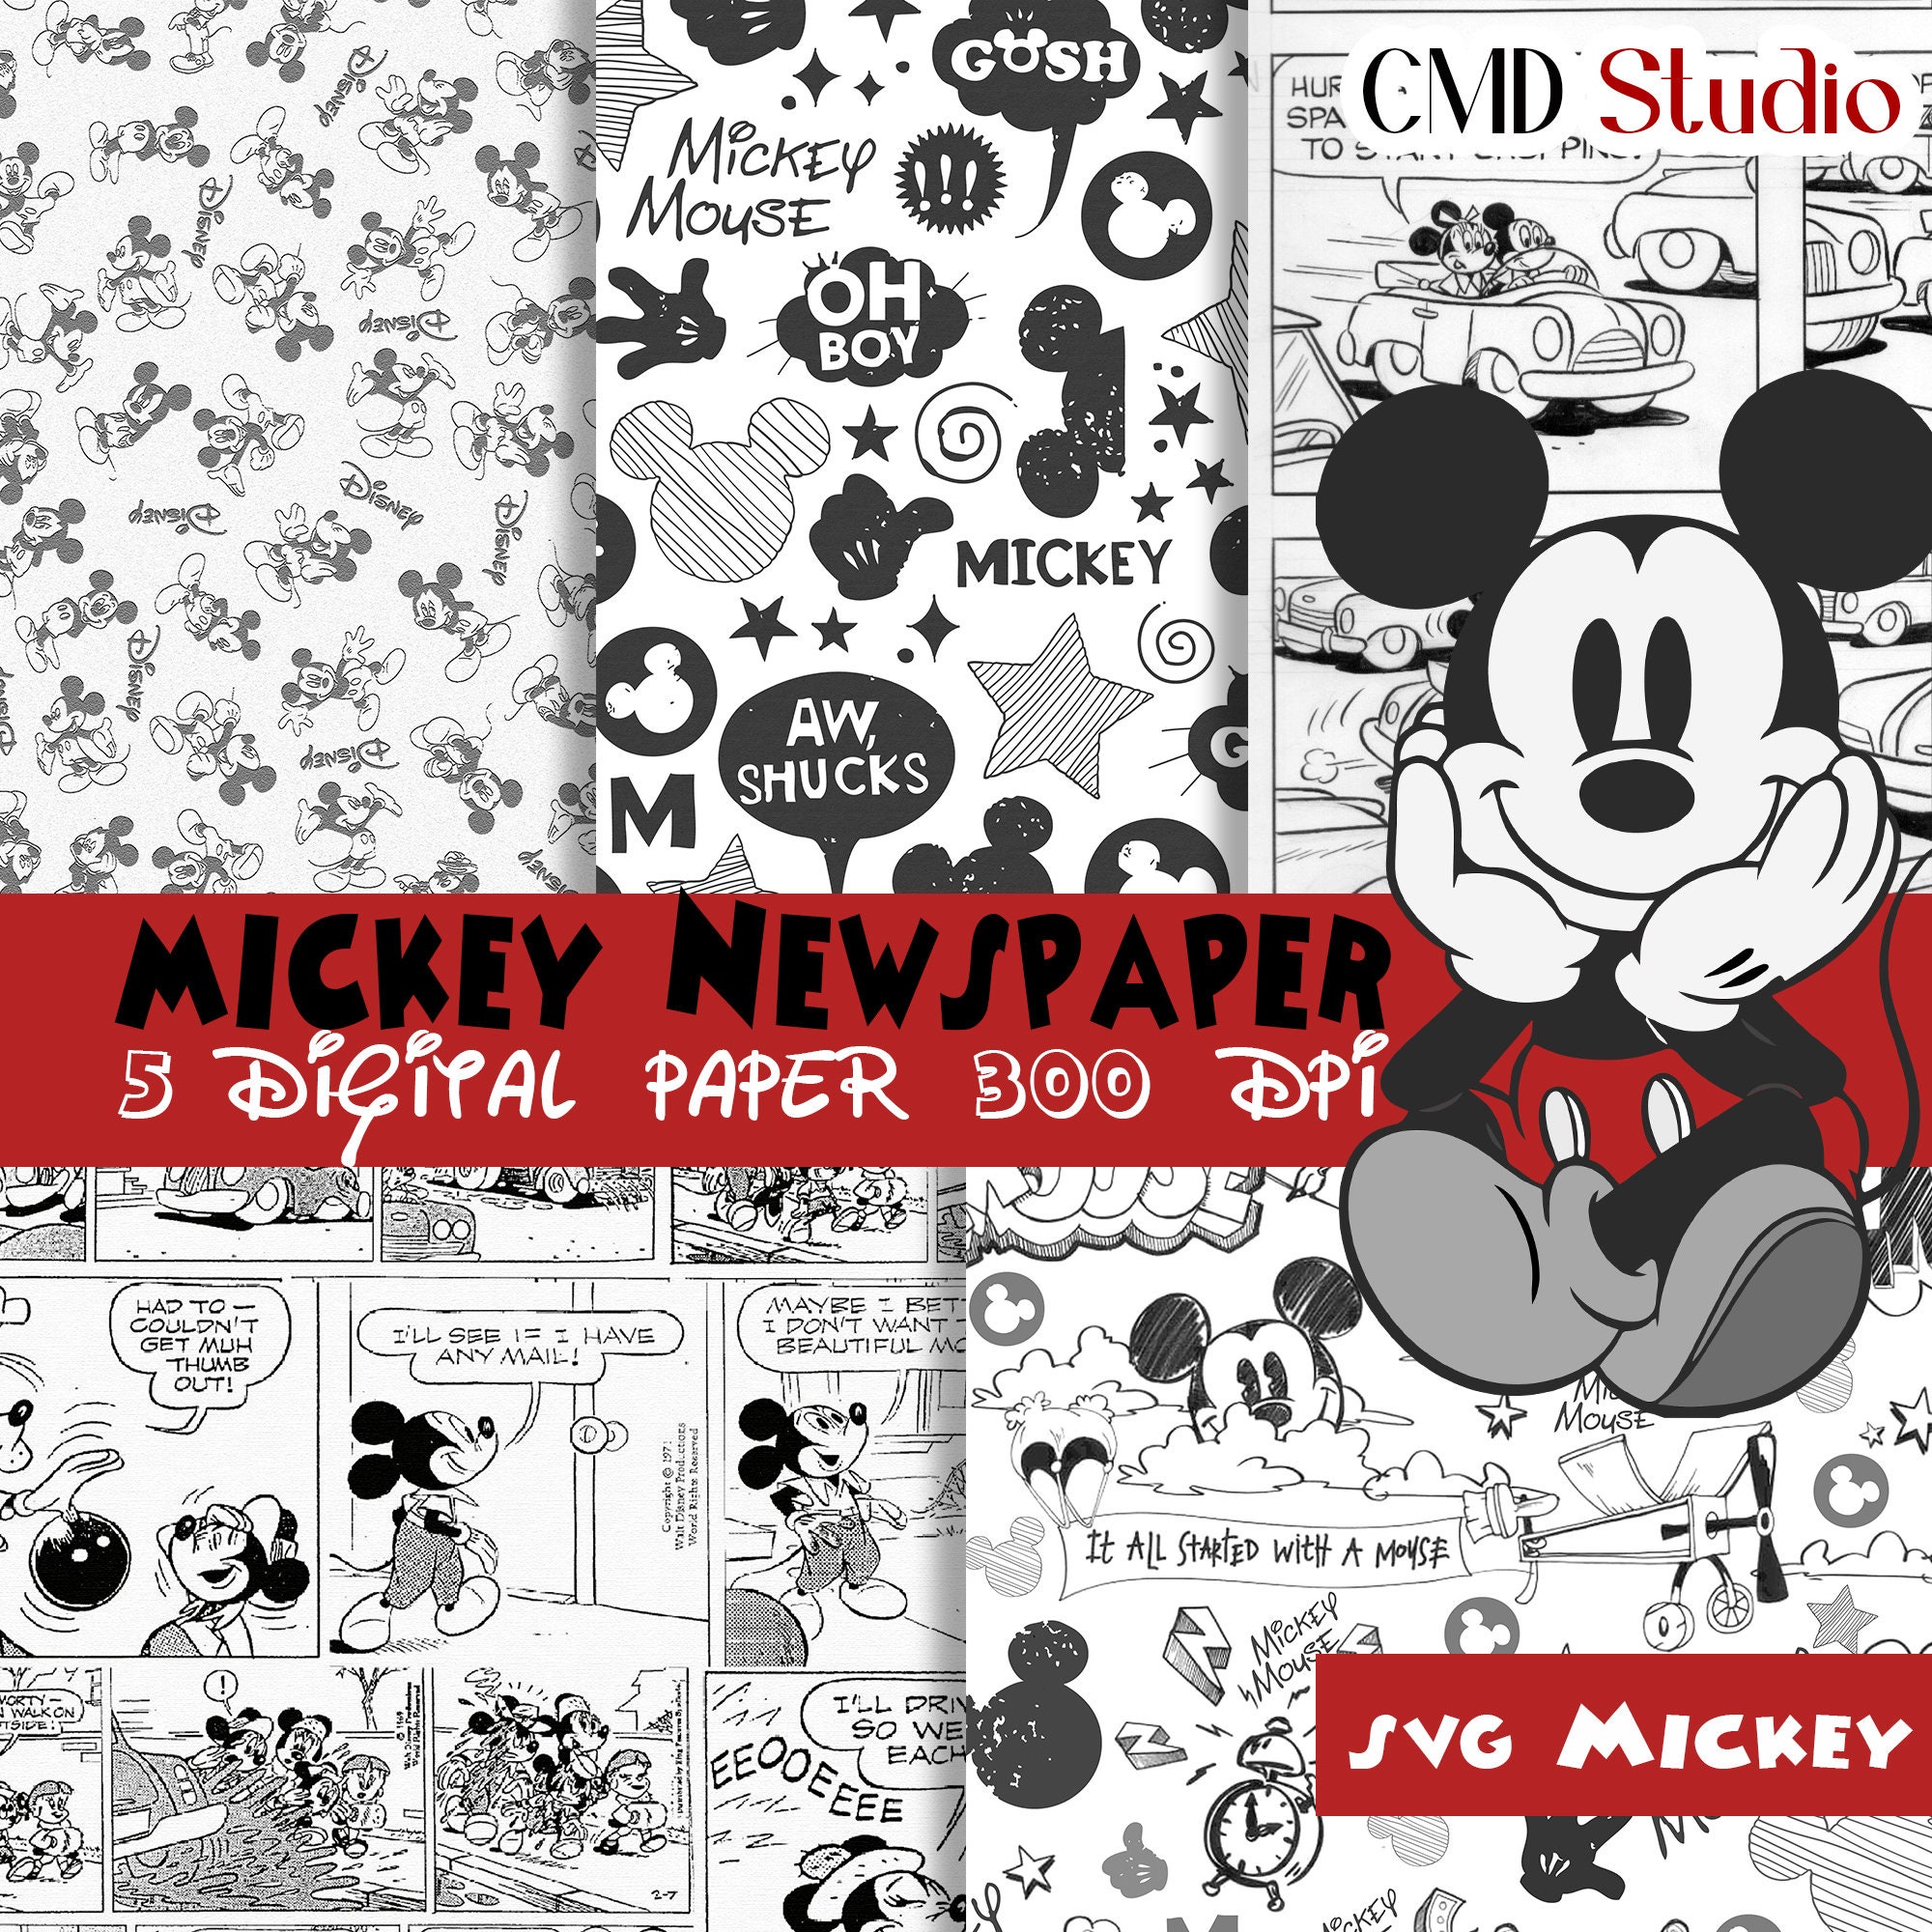 Disney It's a small world digital paper, Mouse ears,digital paper